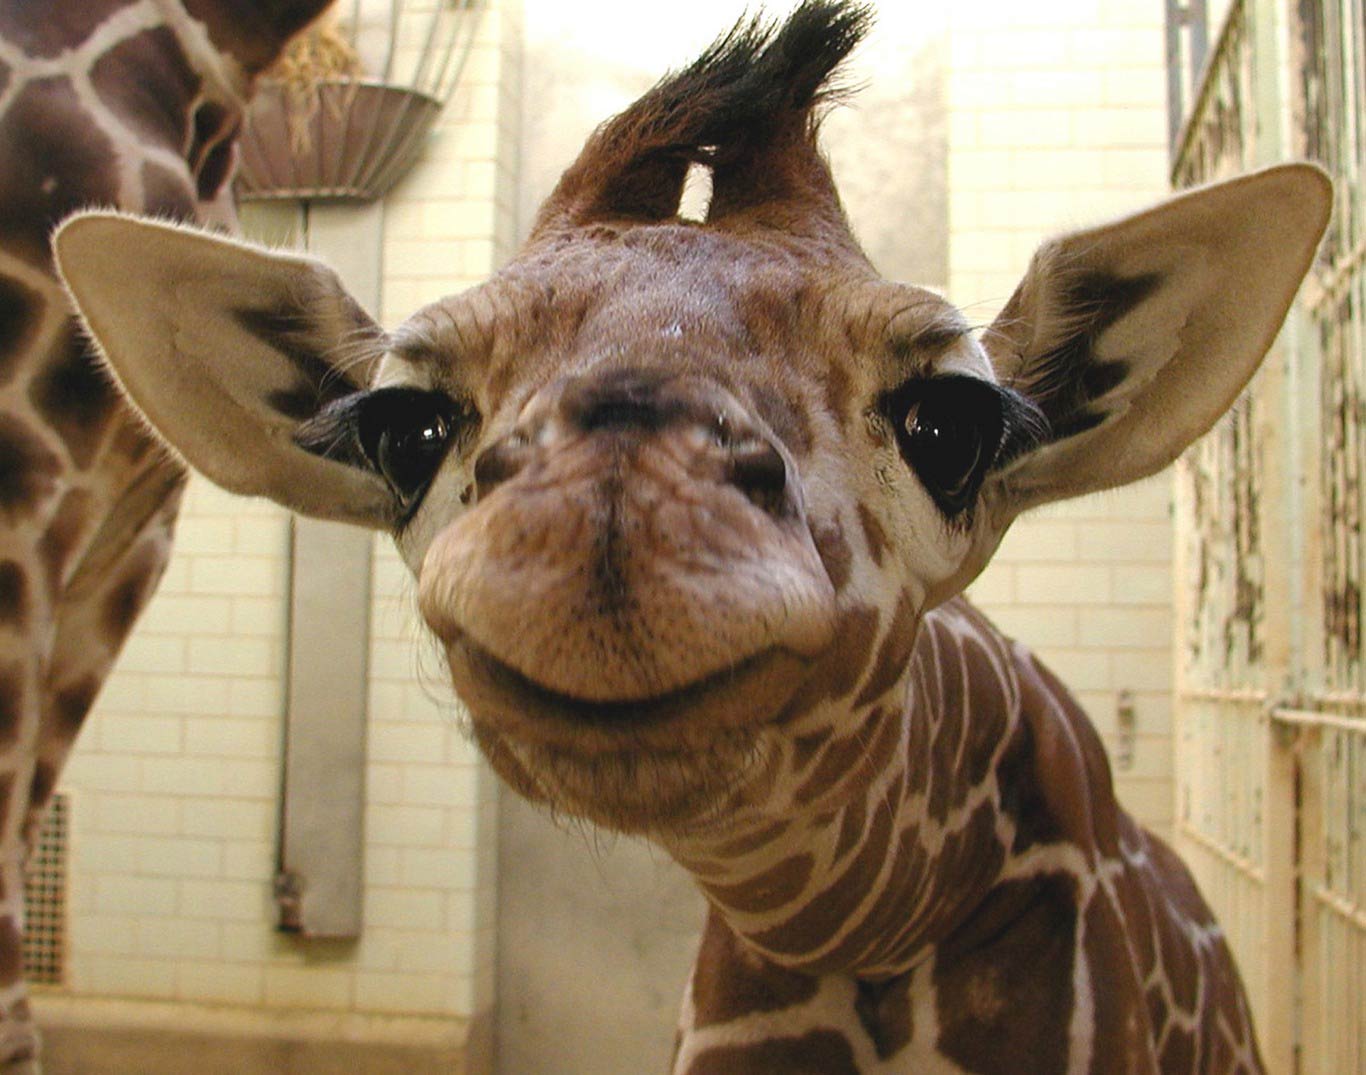 Cute Baby Giraffe. Top quality wallpaper